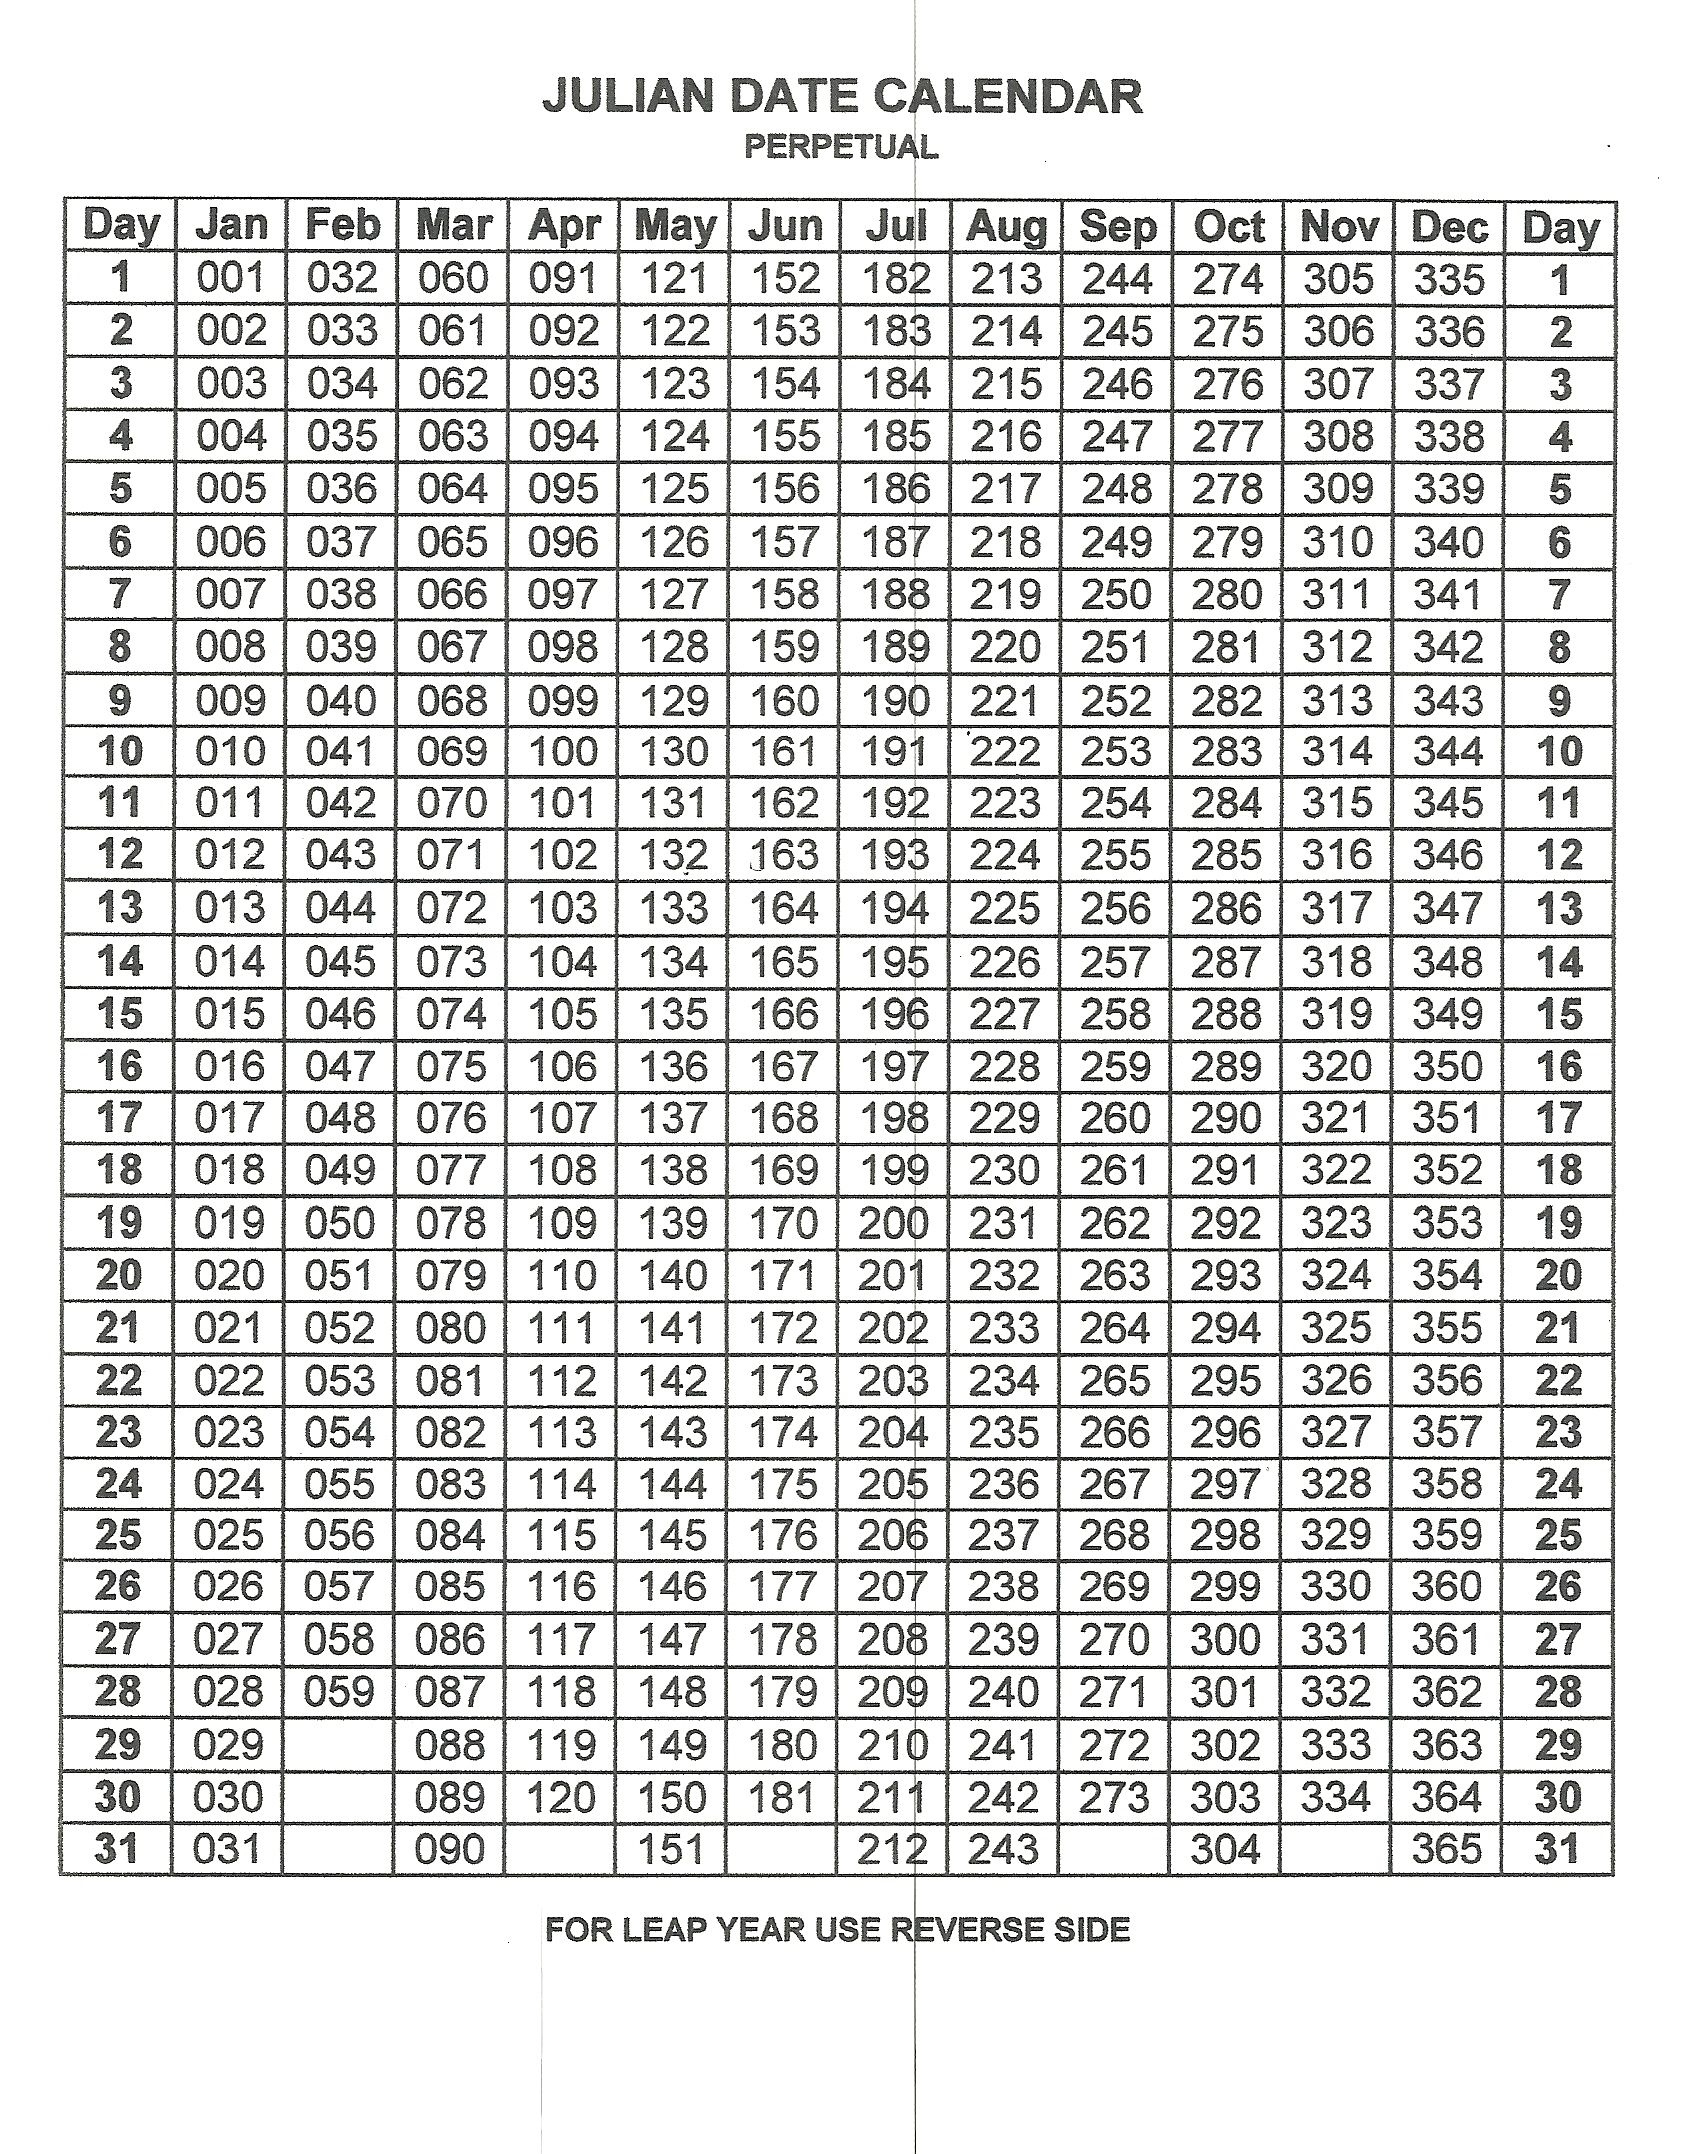 Julian Date Calendar Perpetual | Best Calendar Example Perpetual Julian Date Calender